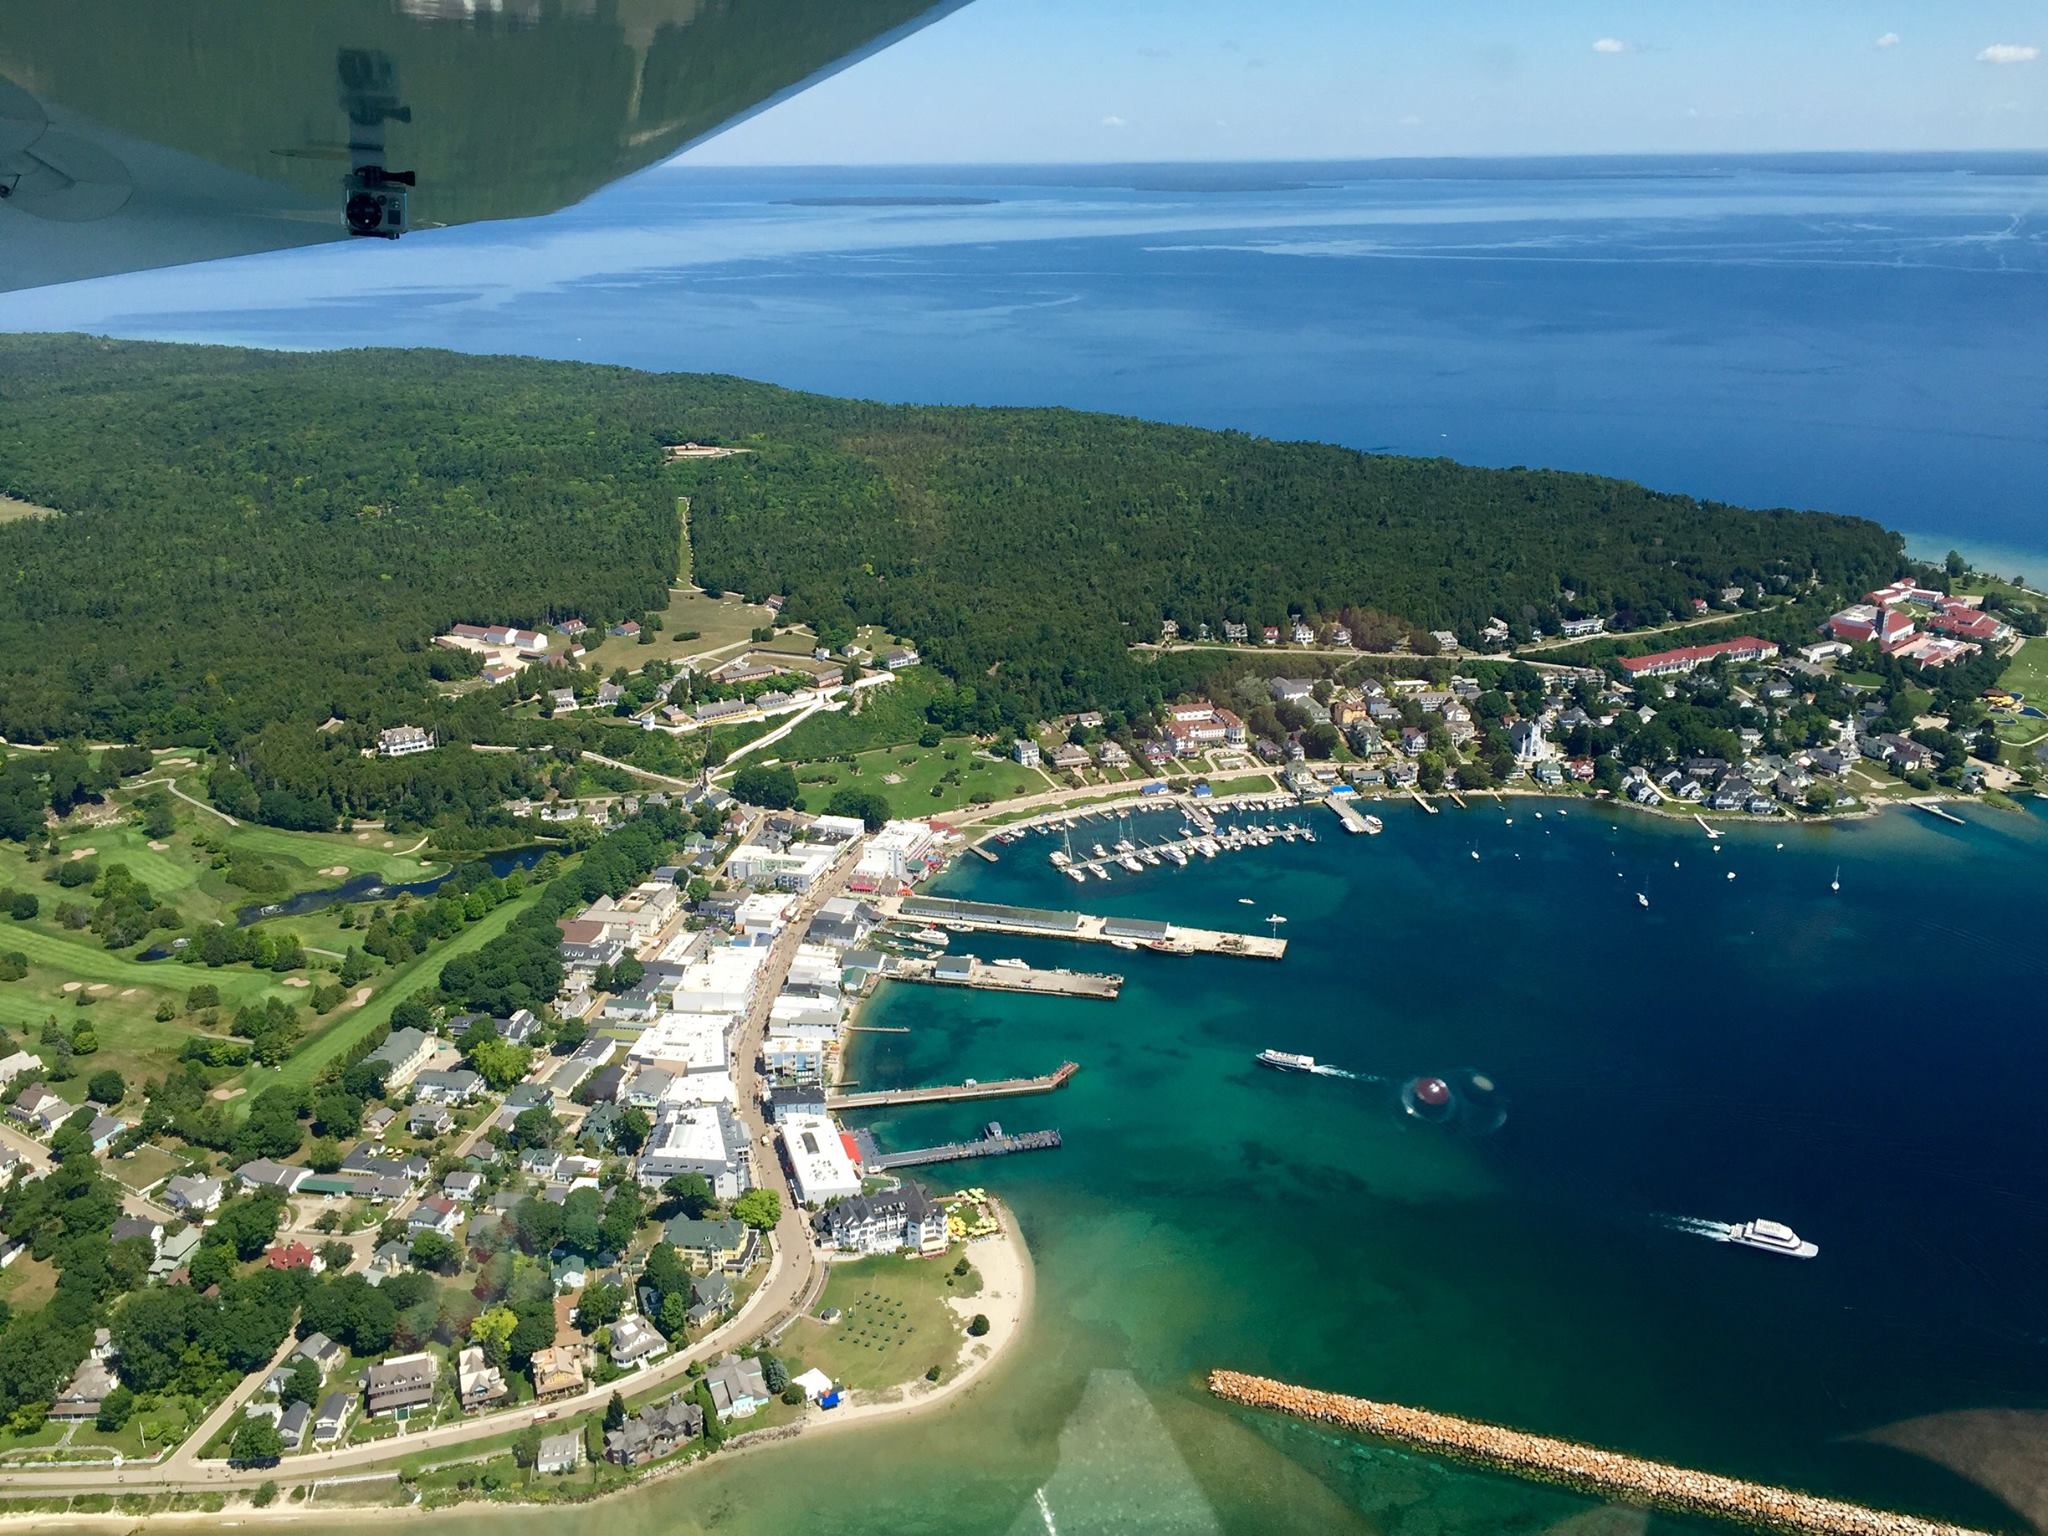 view from plane of Mackinac island, MI